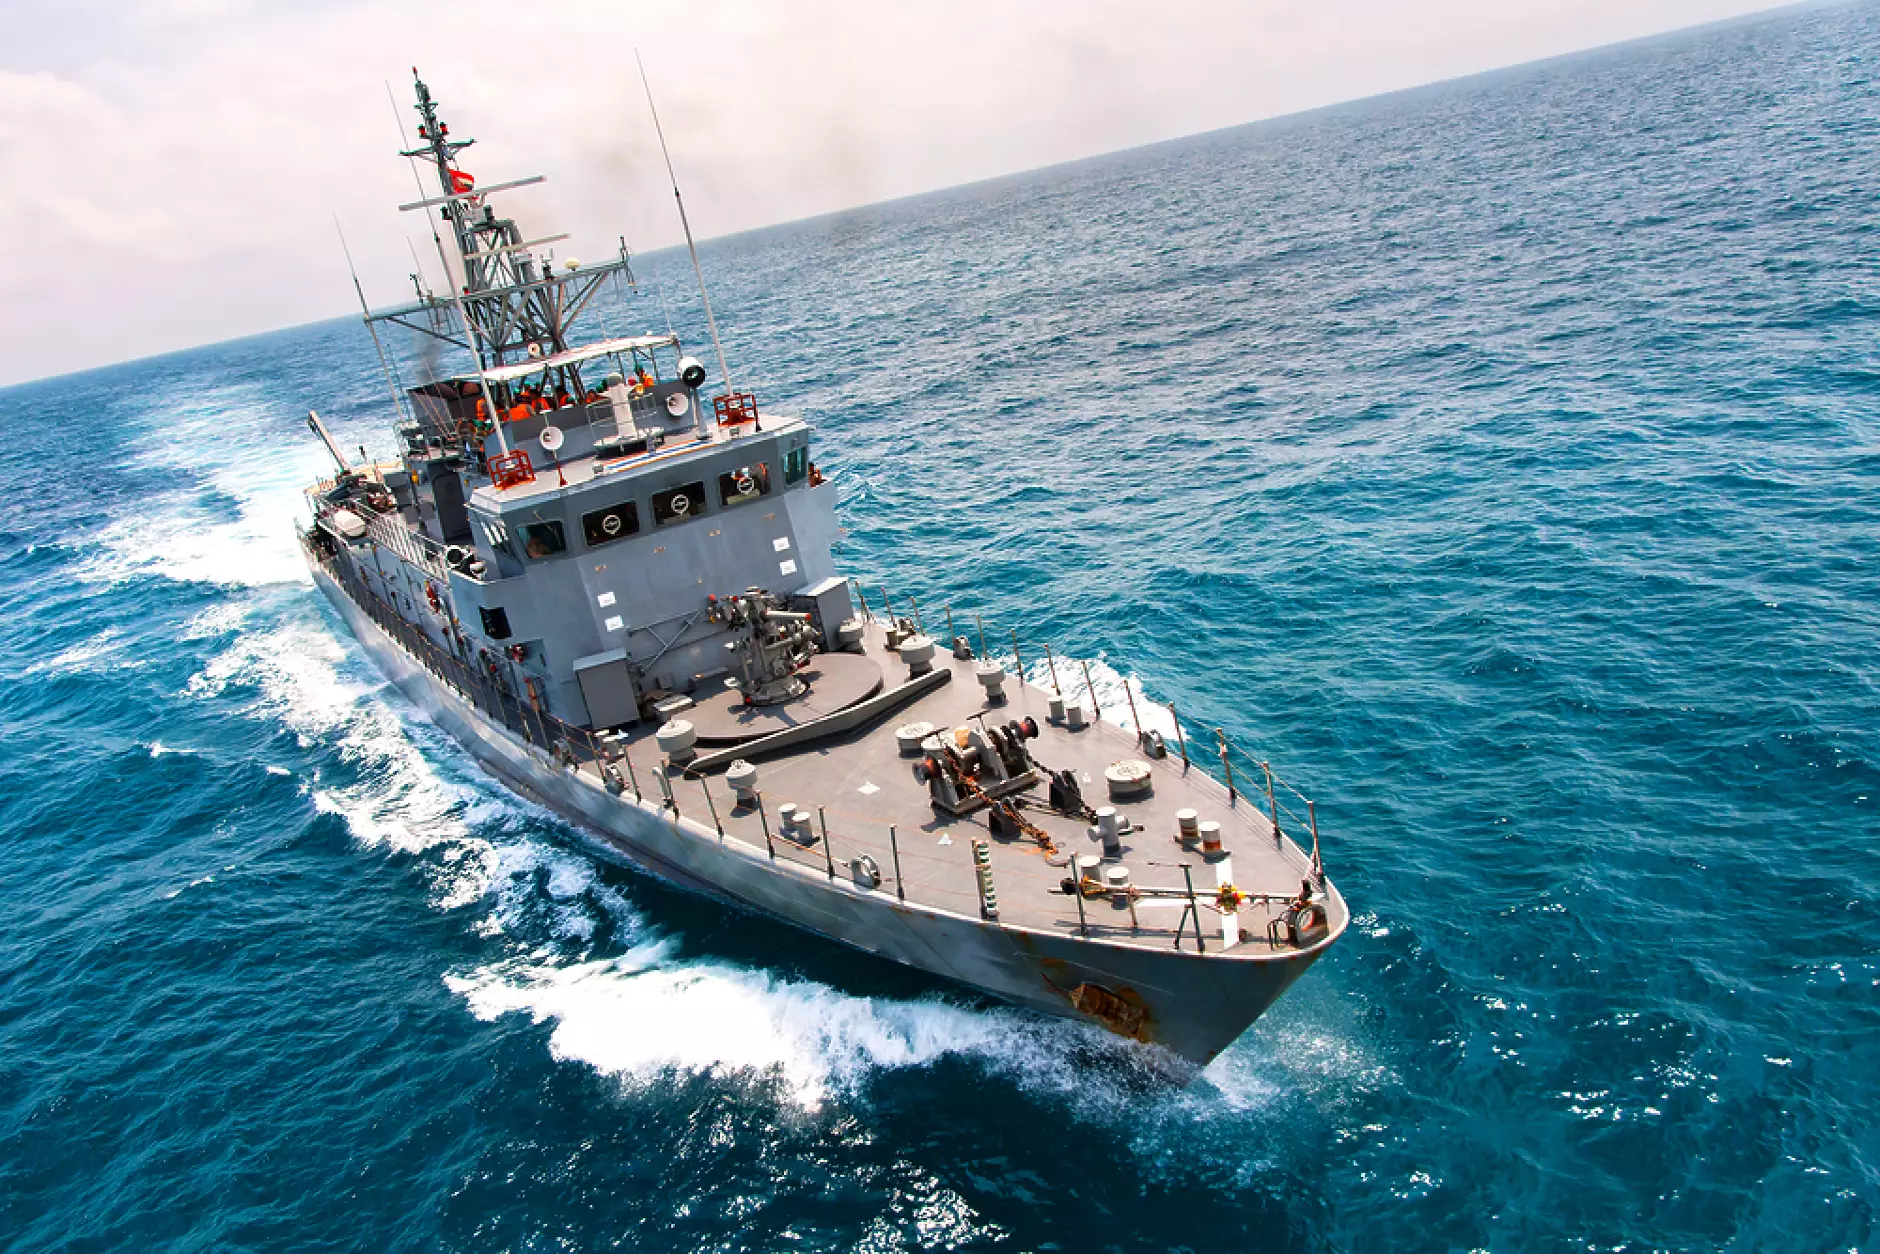 Ройтерс: Румънски военен кораб се удари в мина в Черно море